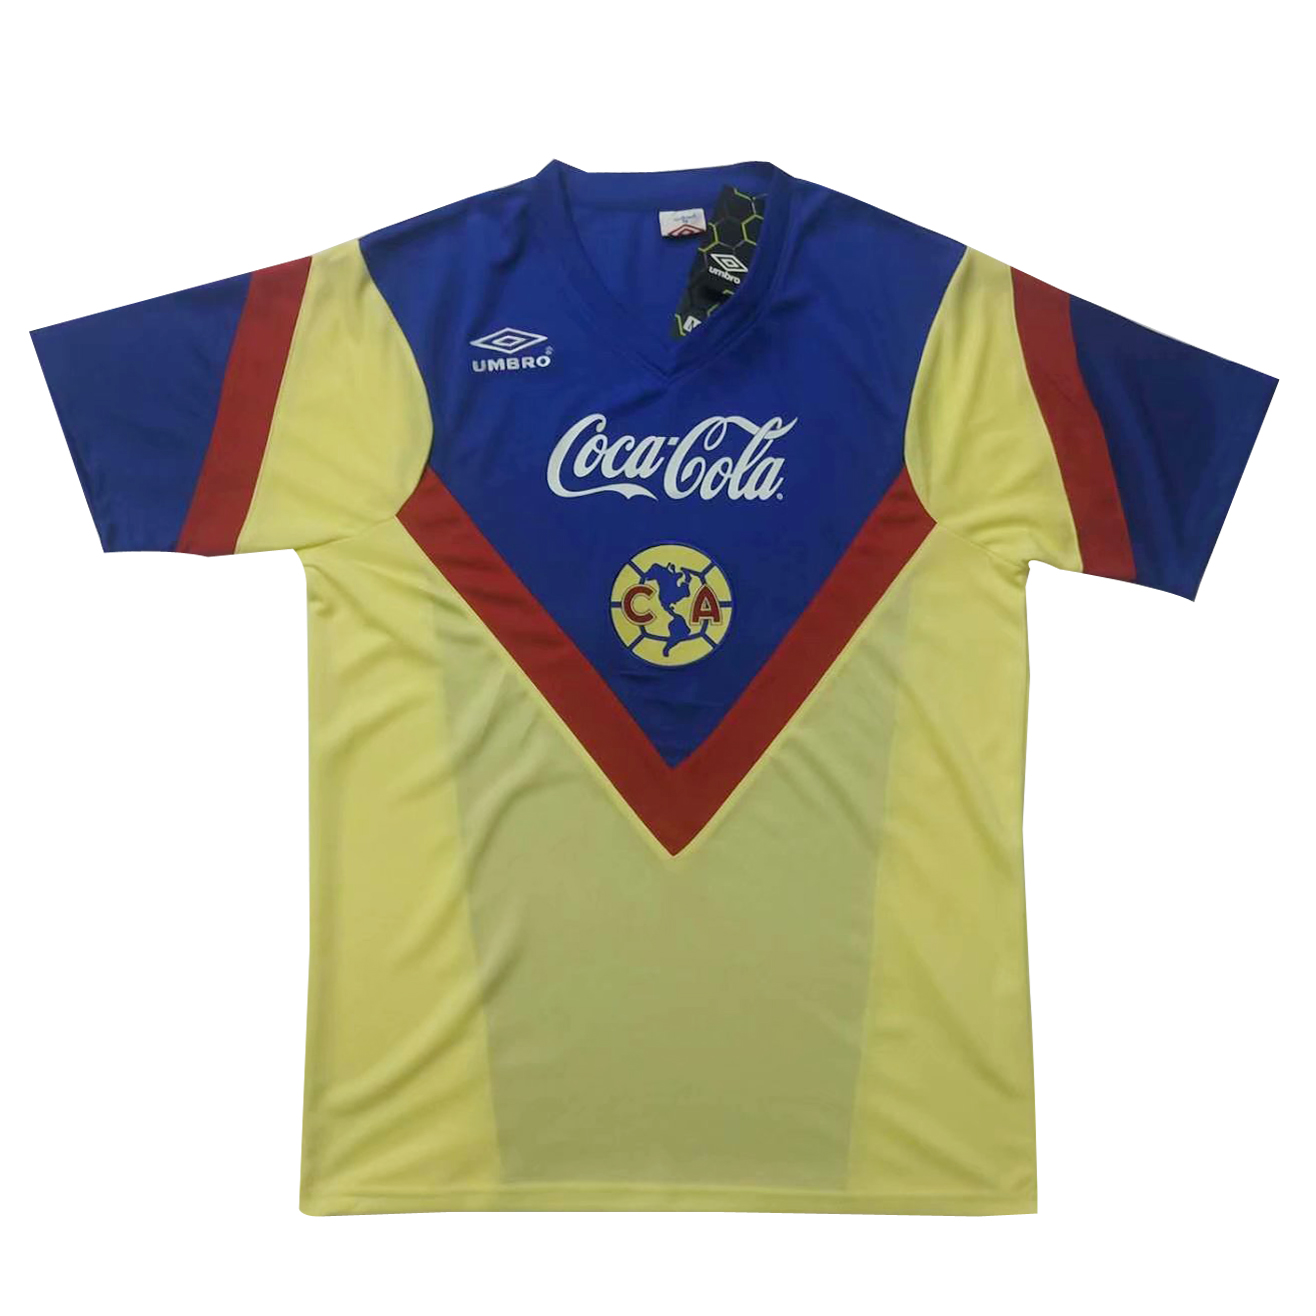 club america 1998 jersey